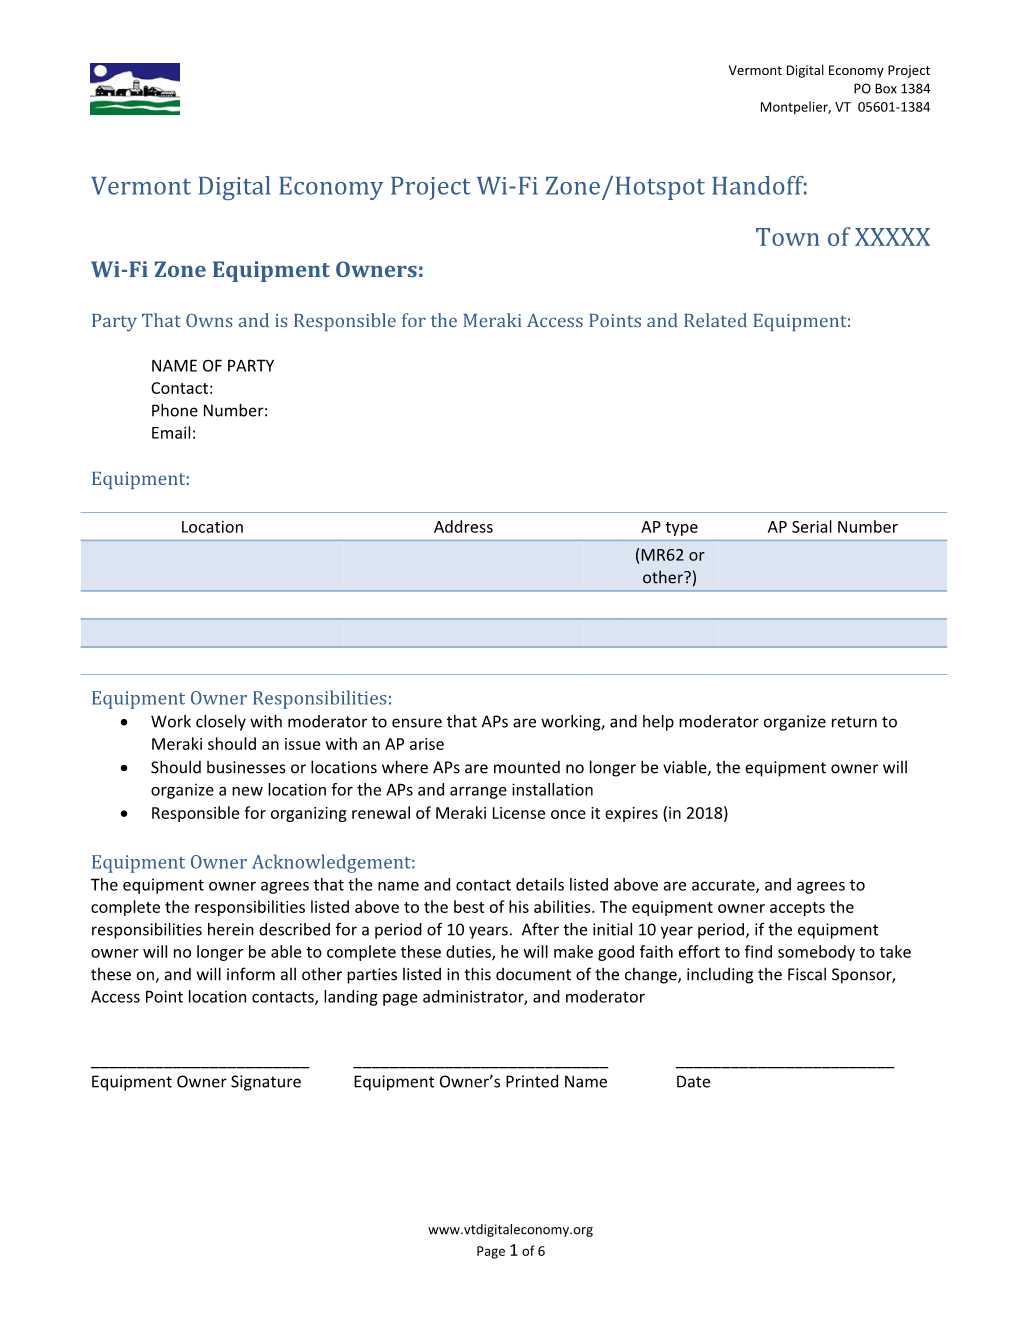 Vermont Digital Economy Project Wi-Fi Zone/Hotspot Handoff